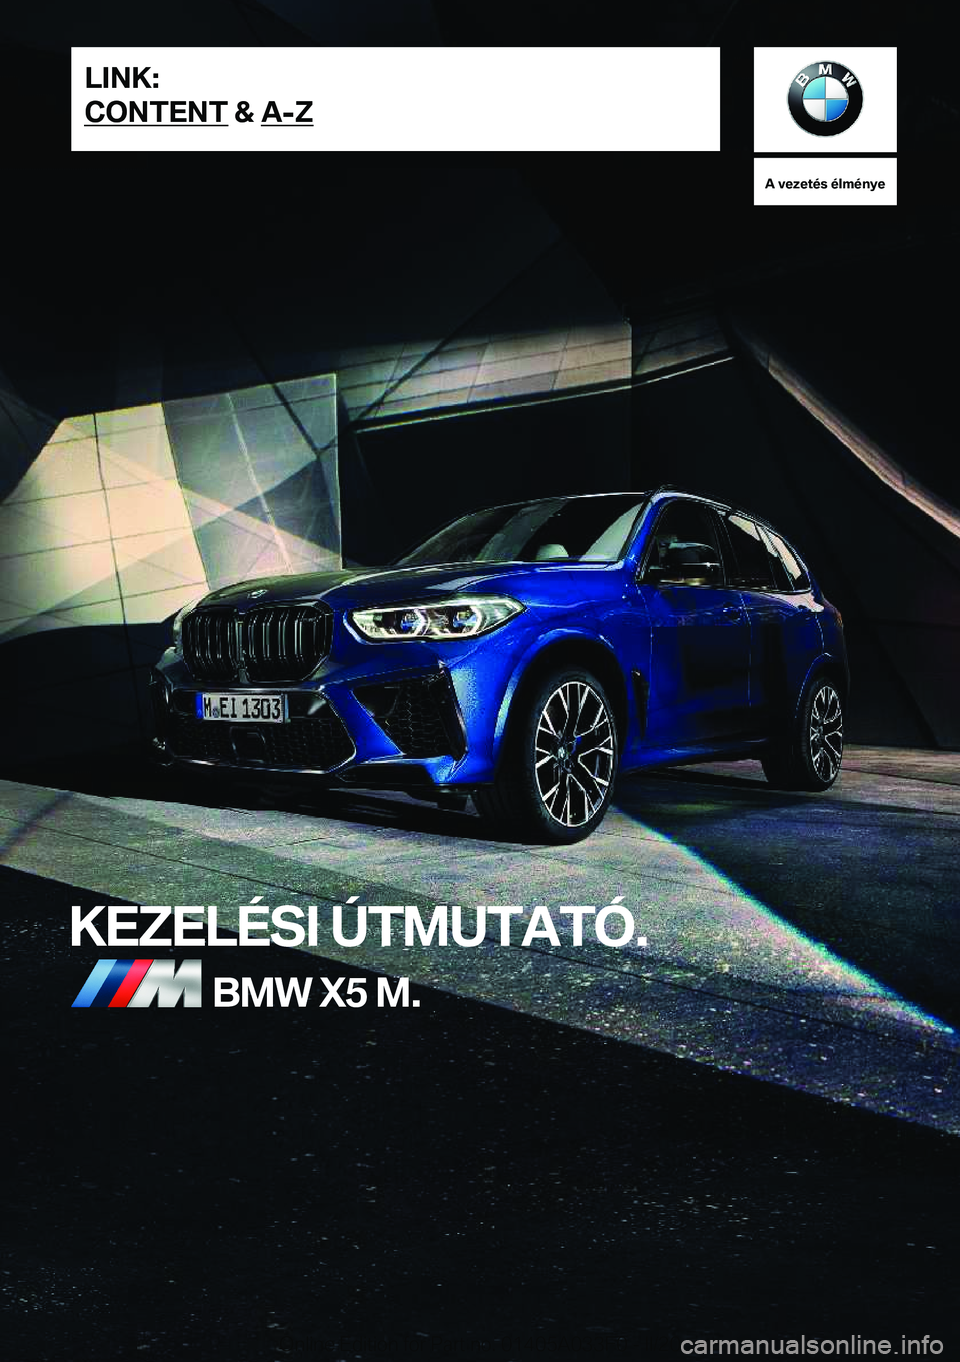 BMW X5 M 2020  Kezelési útmutató (in Hungarian) �A��v�e�z�e�t�